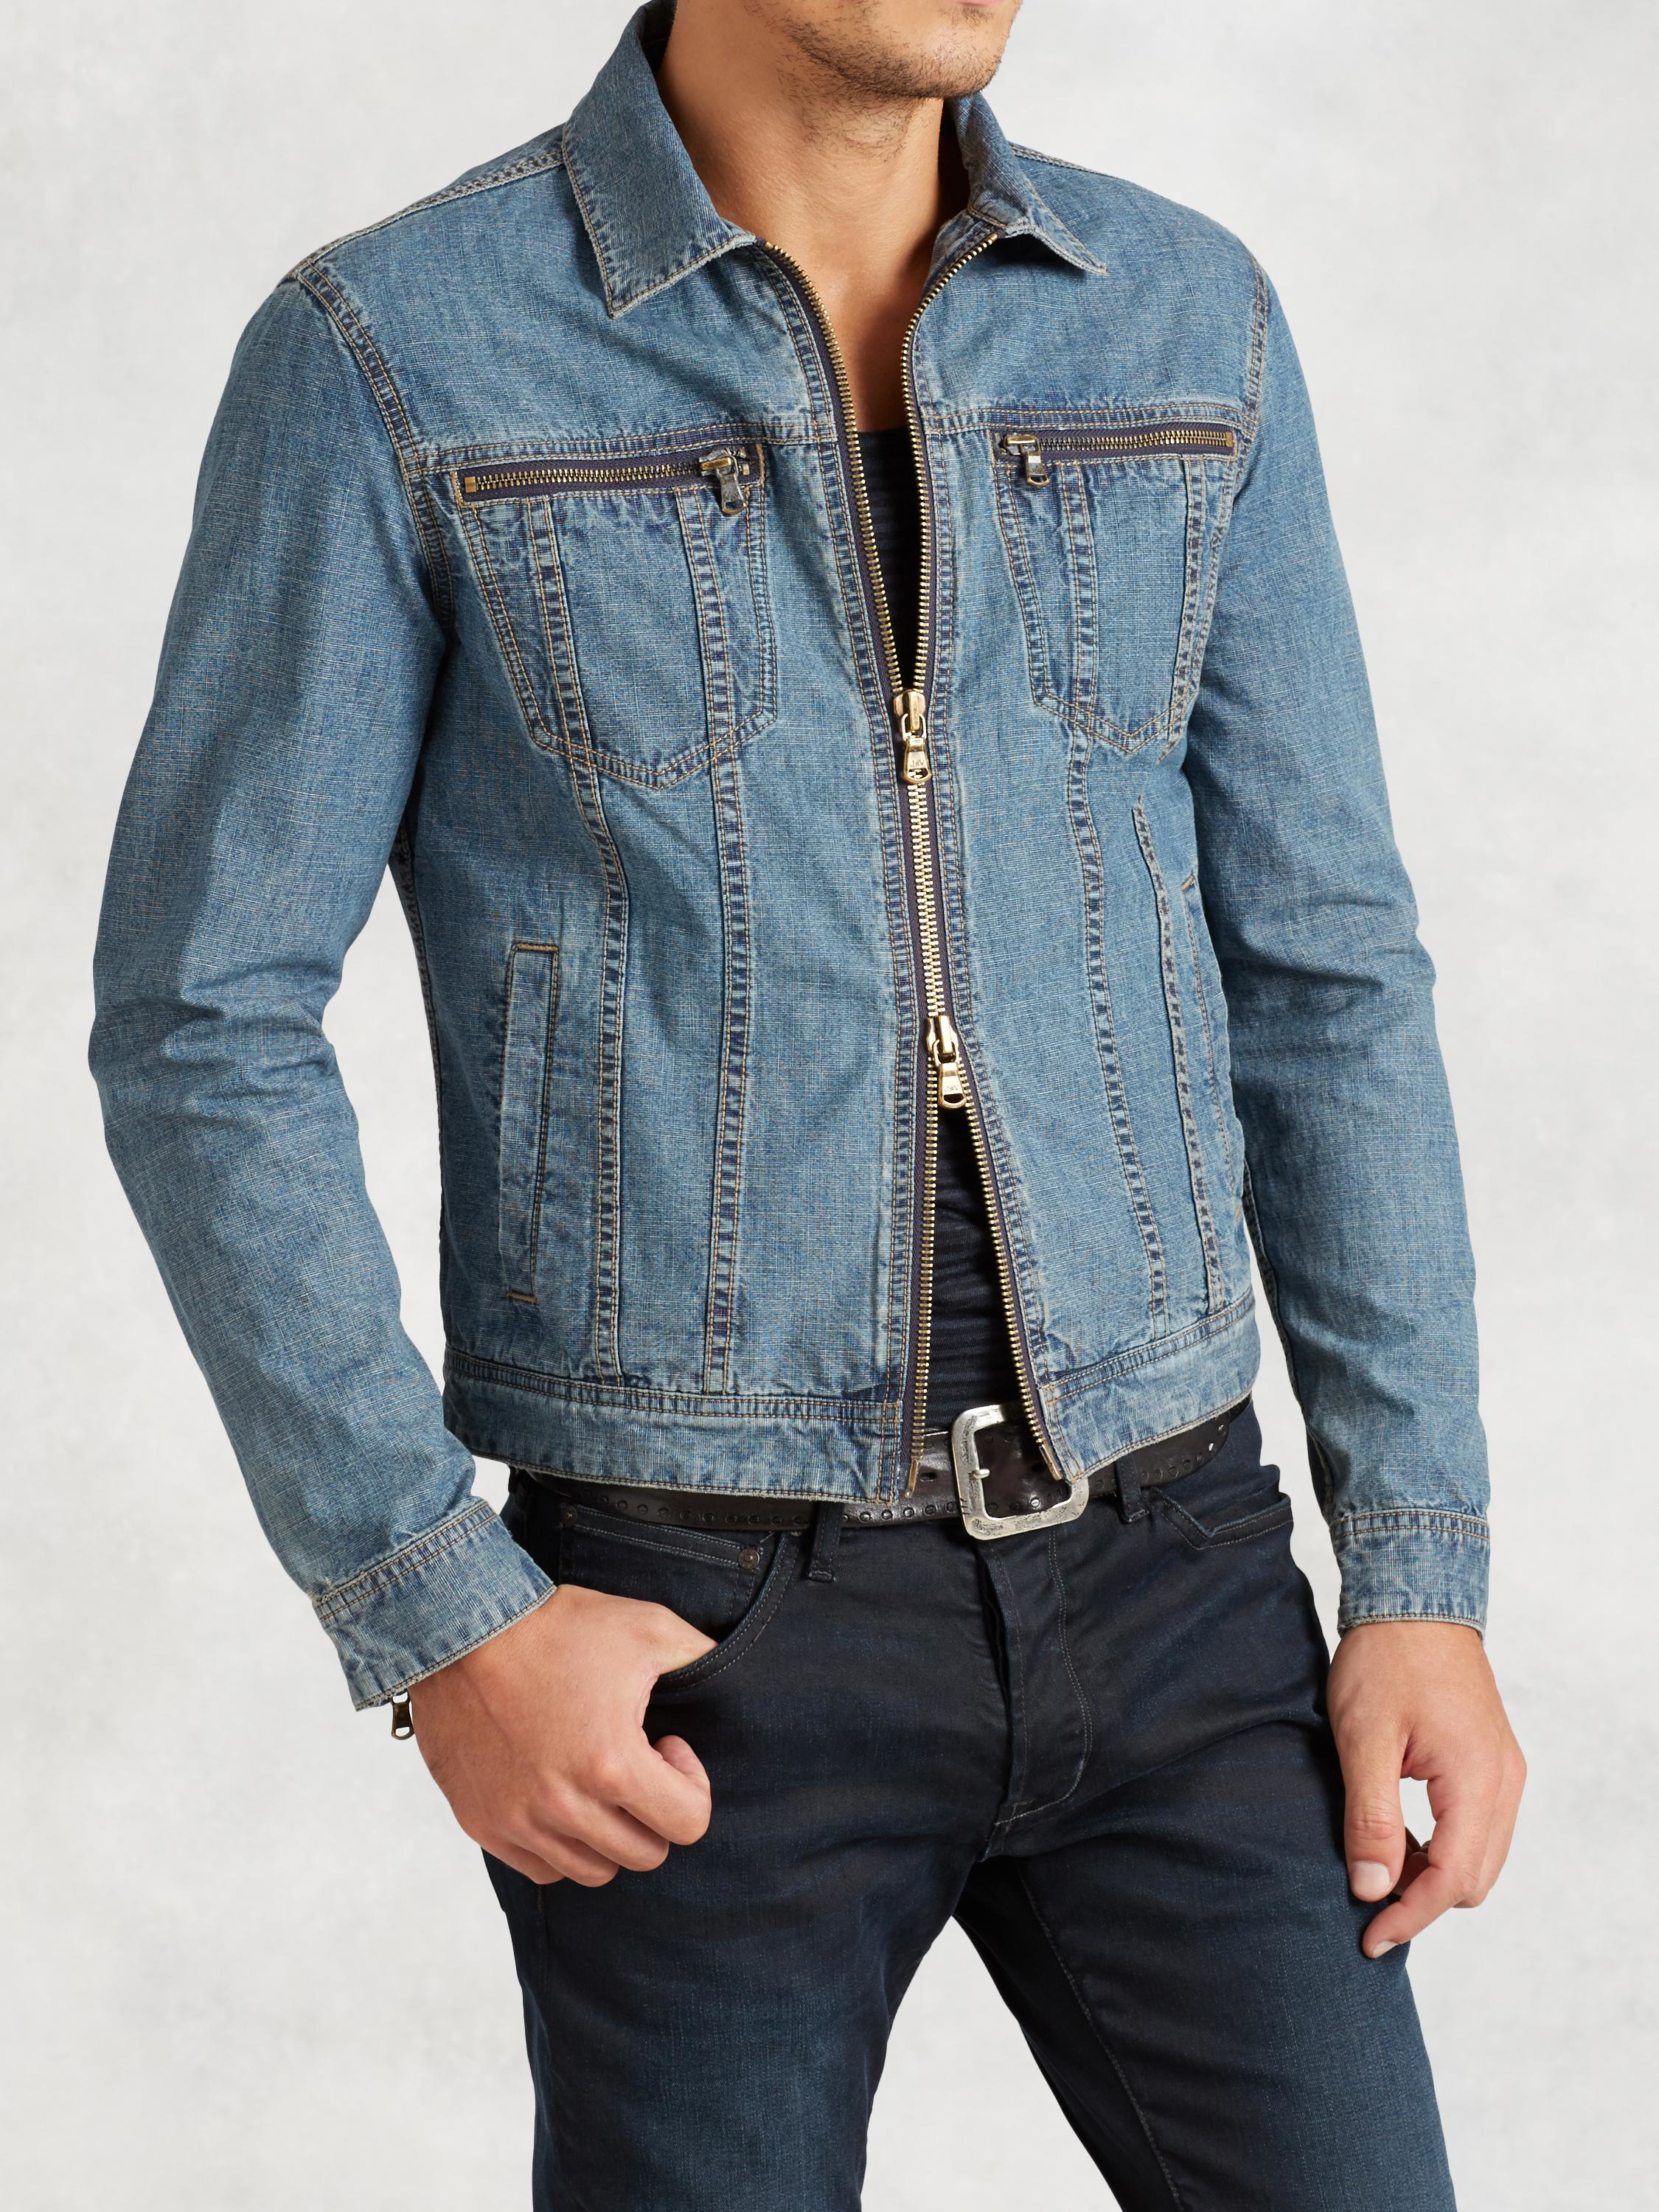 John Varvatos Denim Zip Jacket in Blue for Men - Lyst